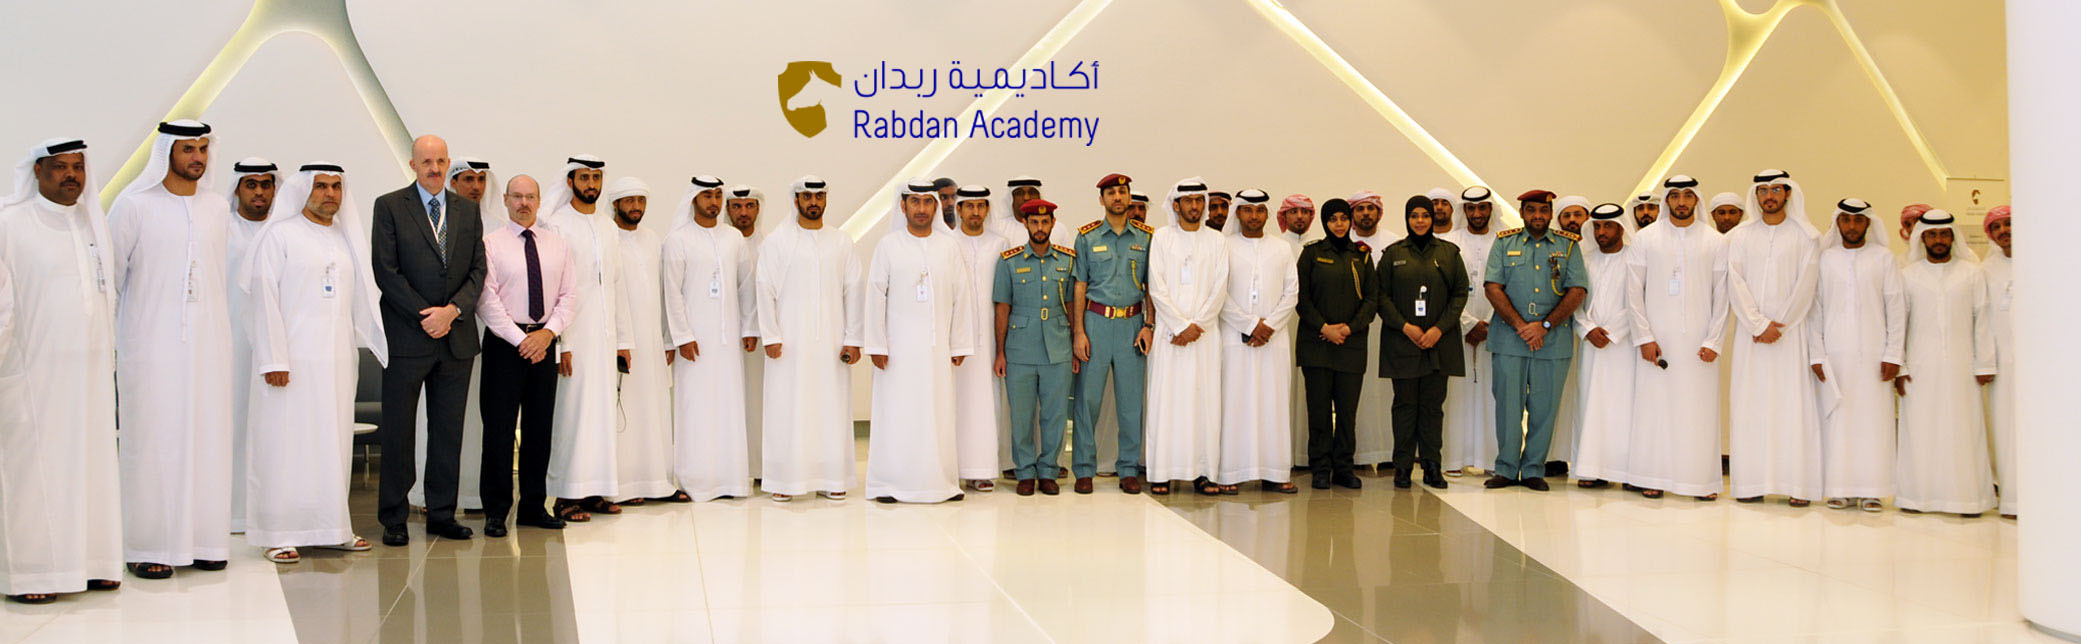 Rabdan Academy Abu Dhabi - Client Case Study - DM Solutionz FZE